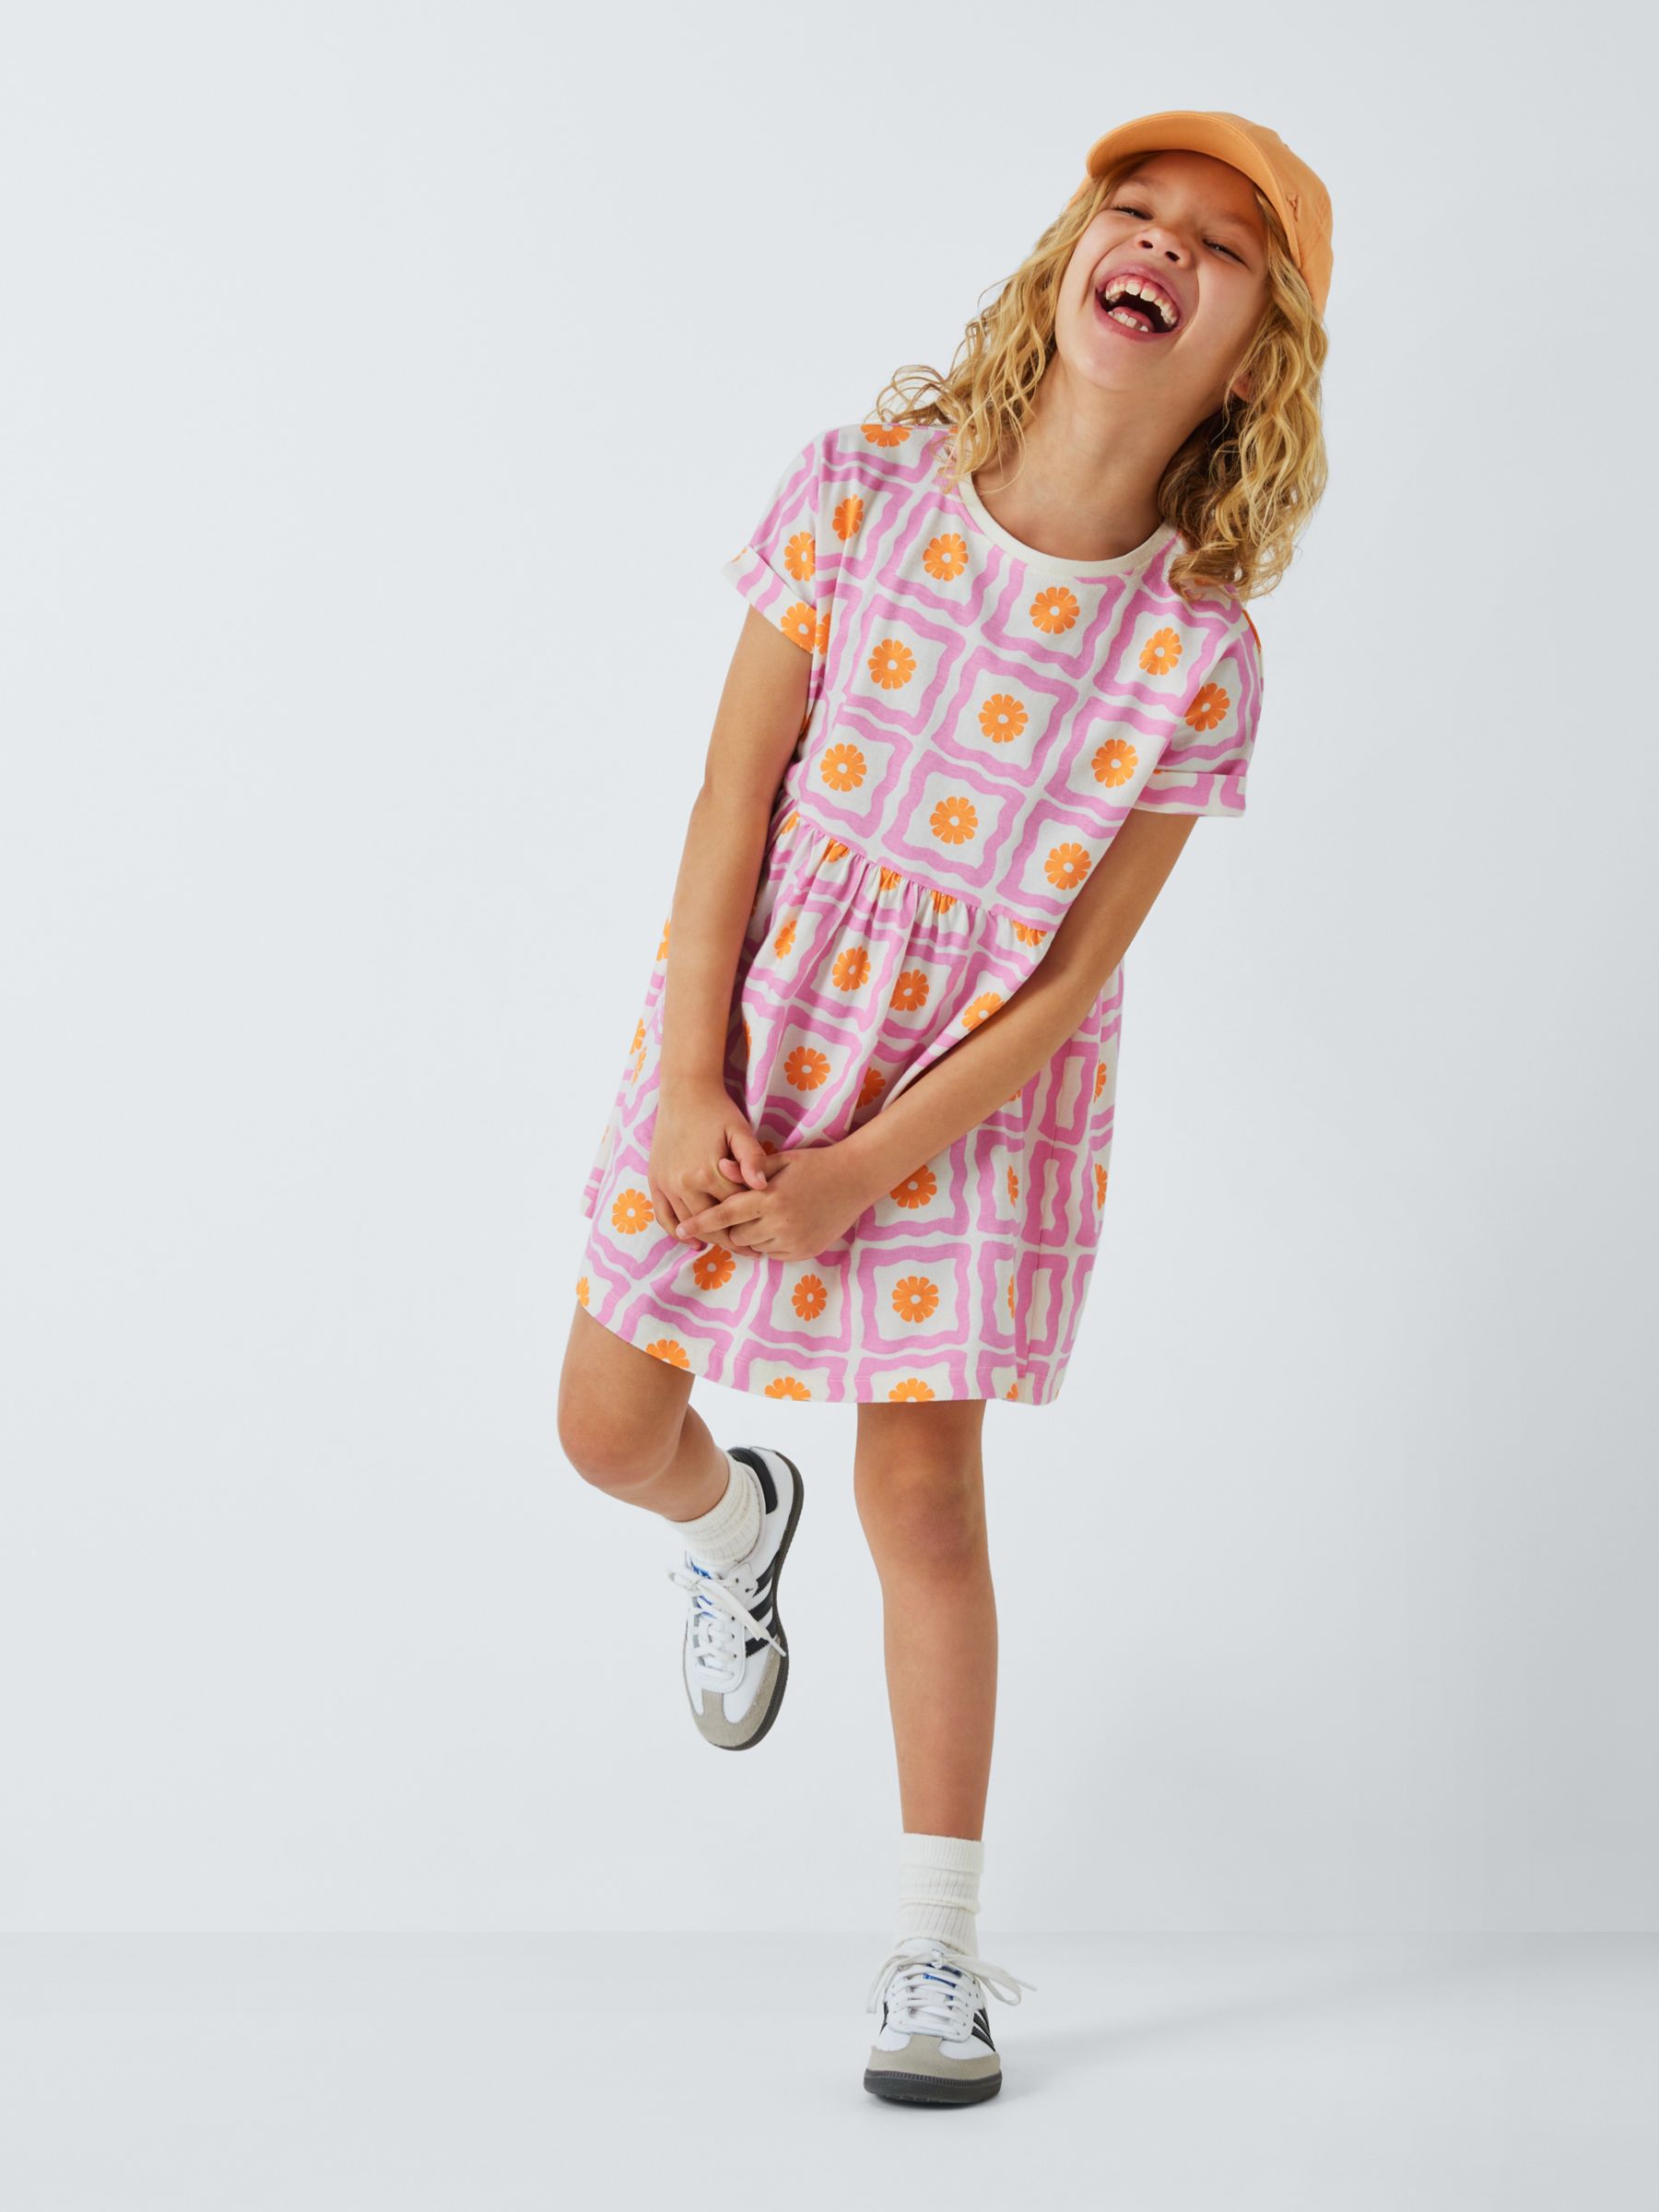 John Lewis ANYDAY Kids' Floral T-Shirt Dress, Multi, 11 years